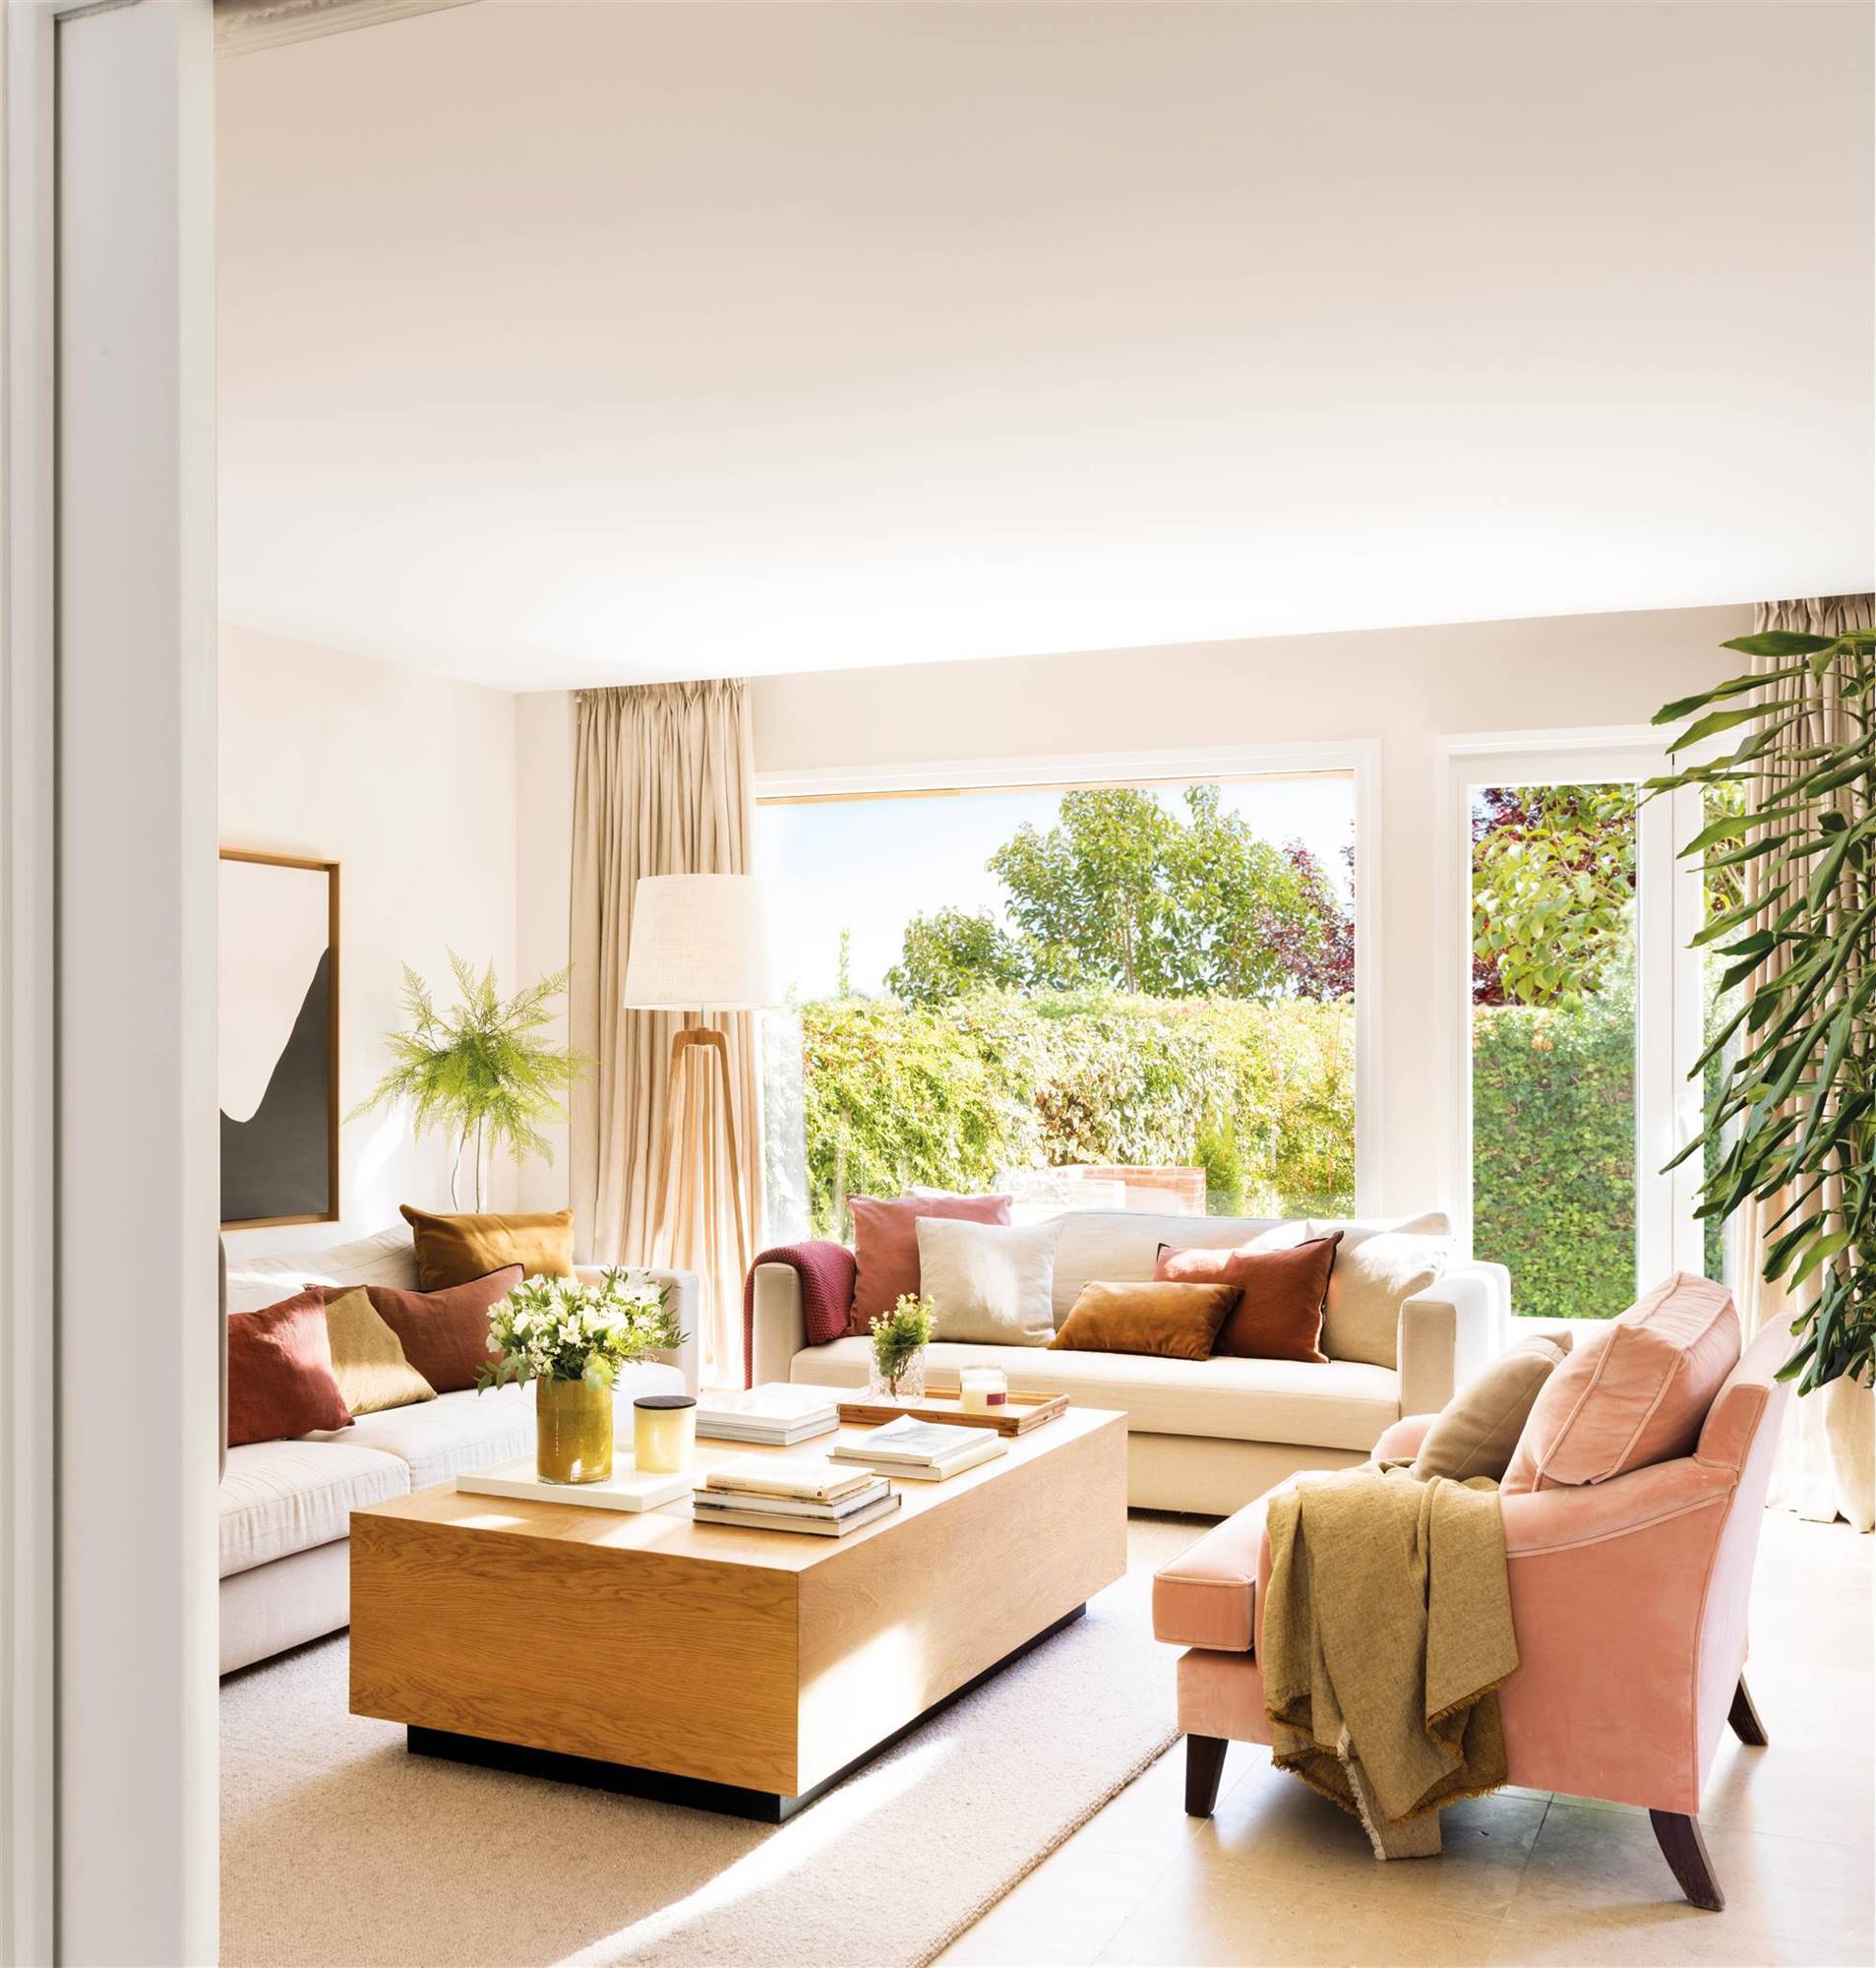 salon-con-sofas-blancos- butaca-rosa-y-mesa-de-centr-de-madera-00513088